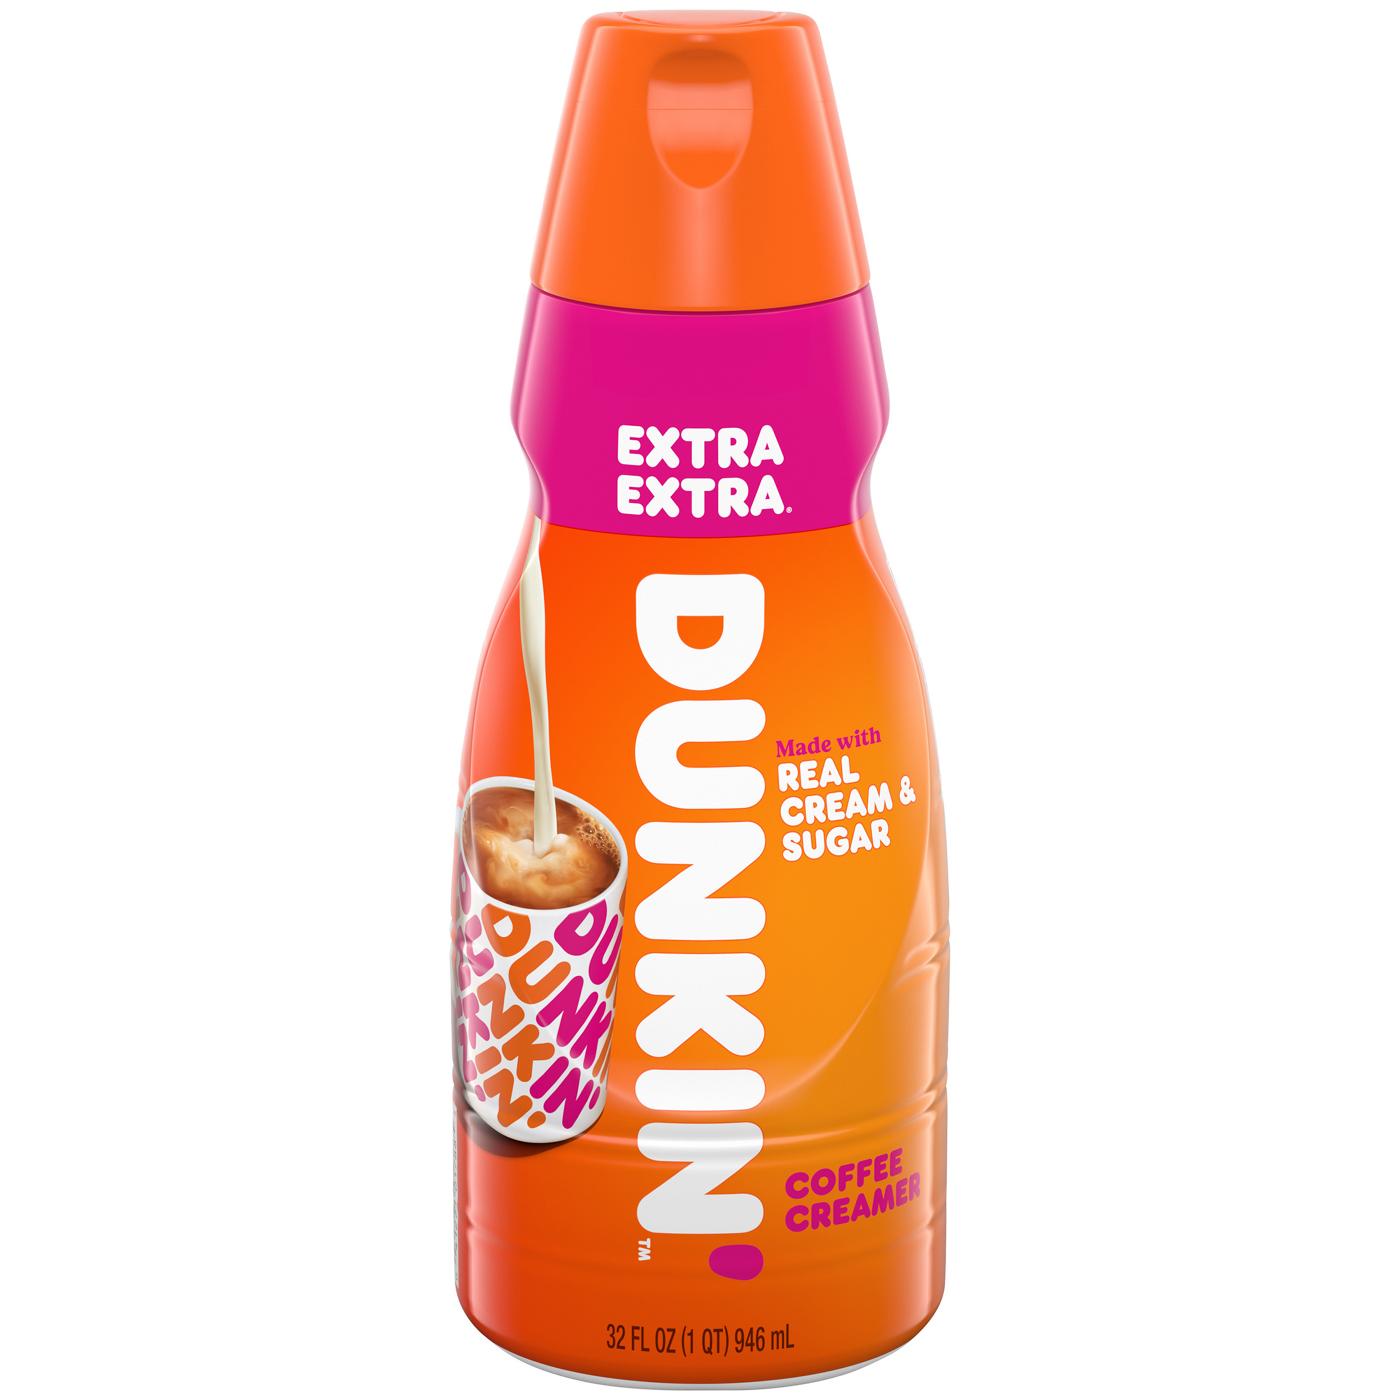 Dunkin' Extra Extra Liquid Coffee Creamer; image 1 of 5